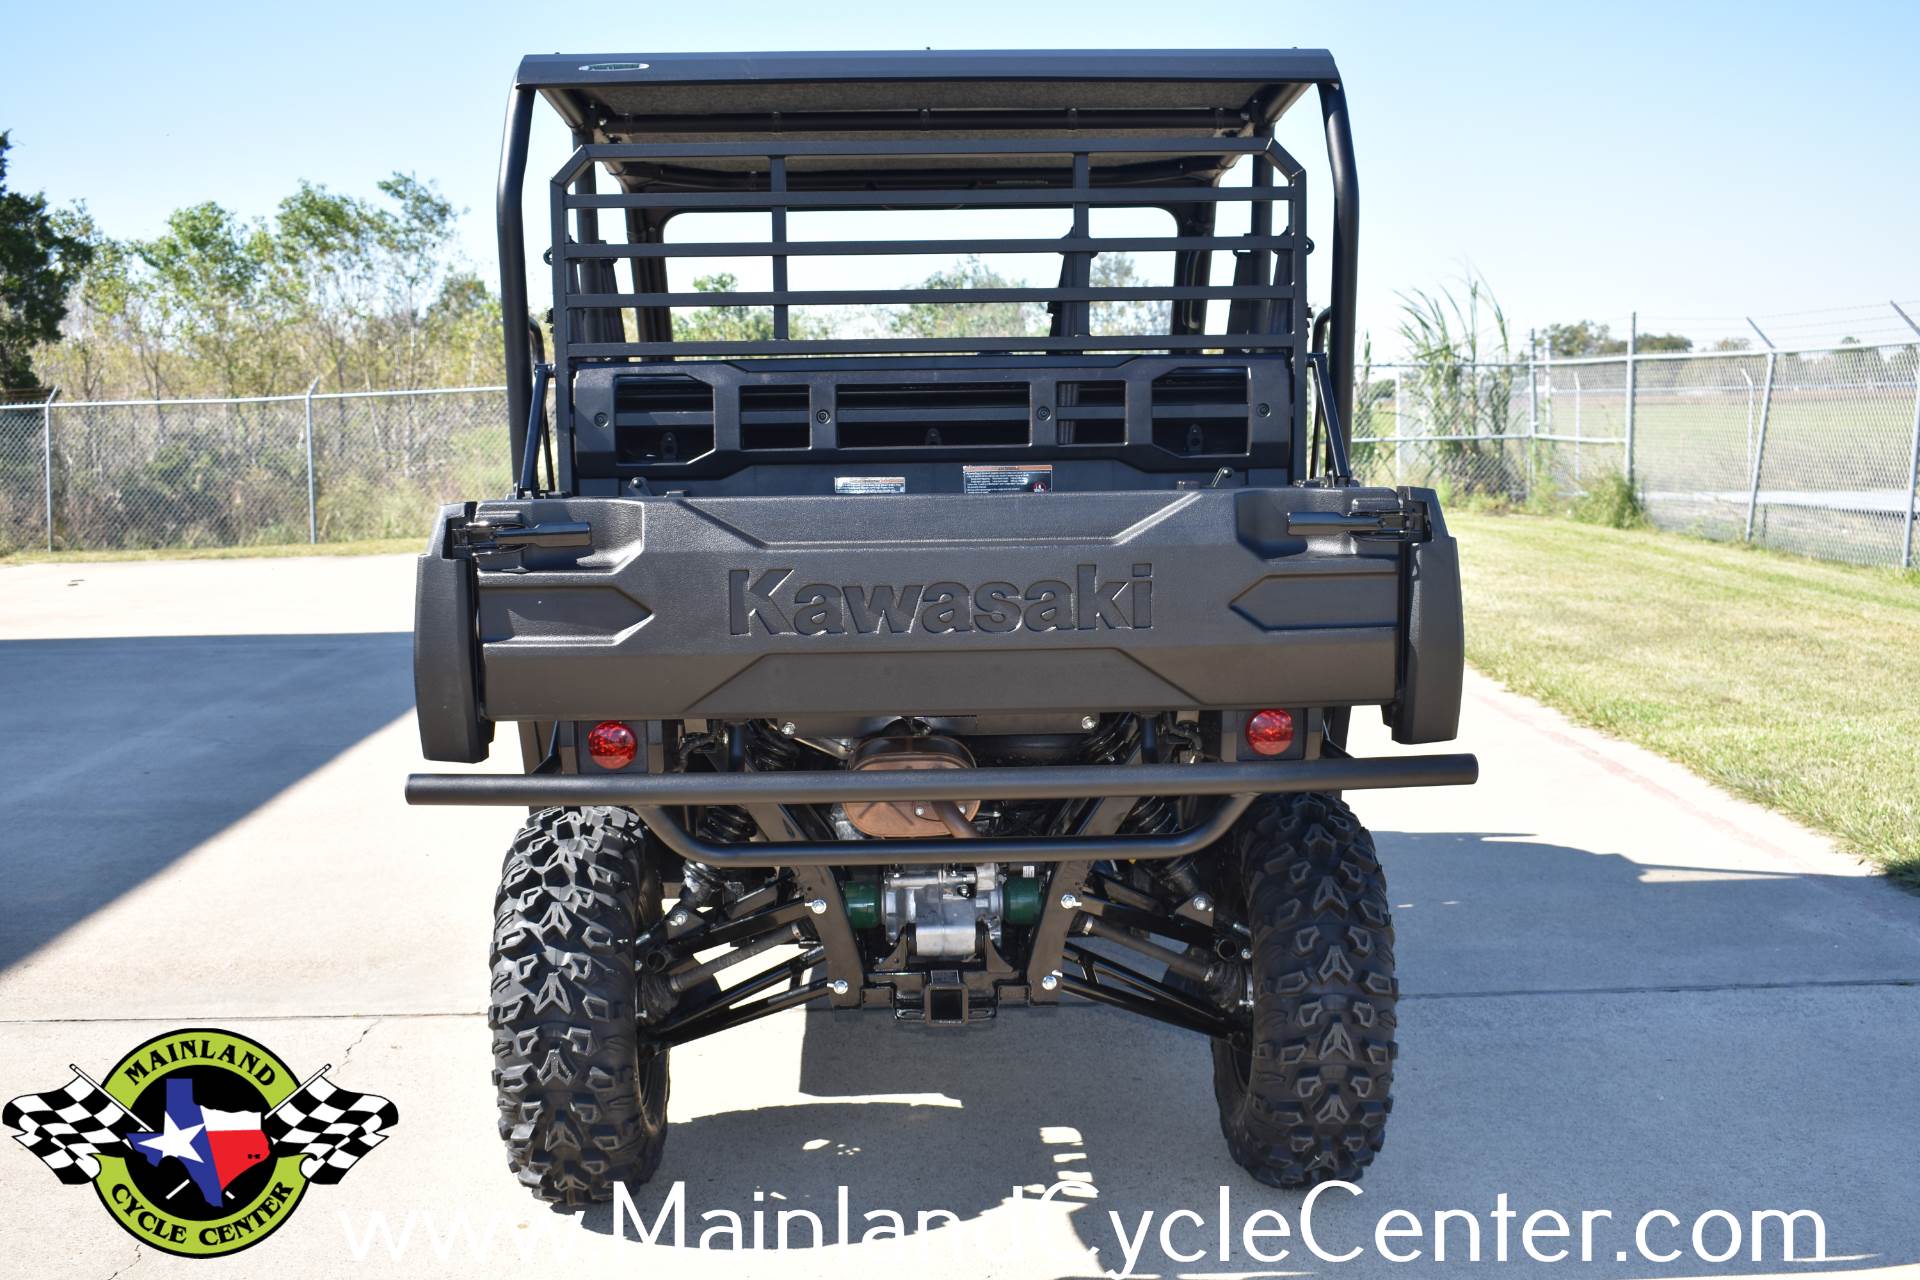 2019 Kawasaki Mule PRO-FXT EPS in La Marque, Texas - Photo 18